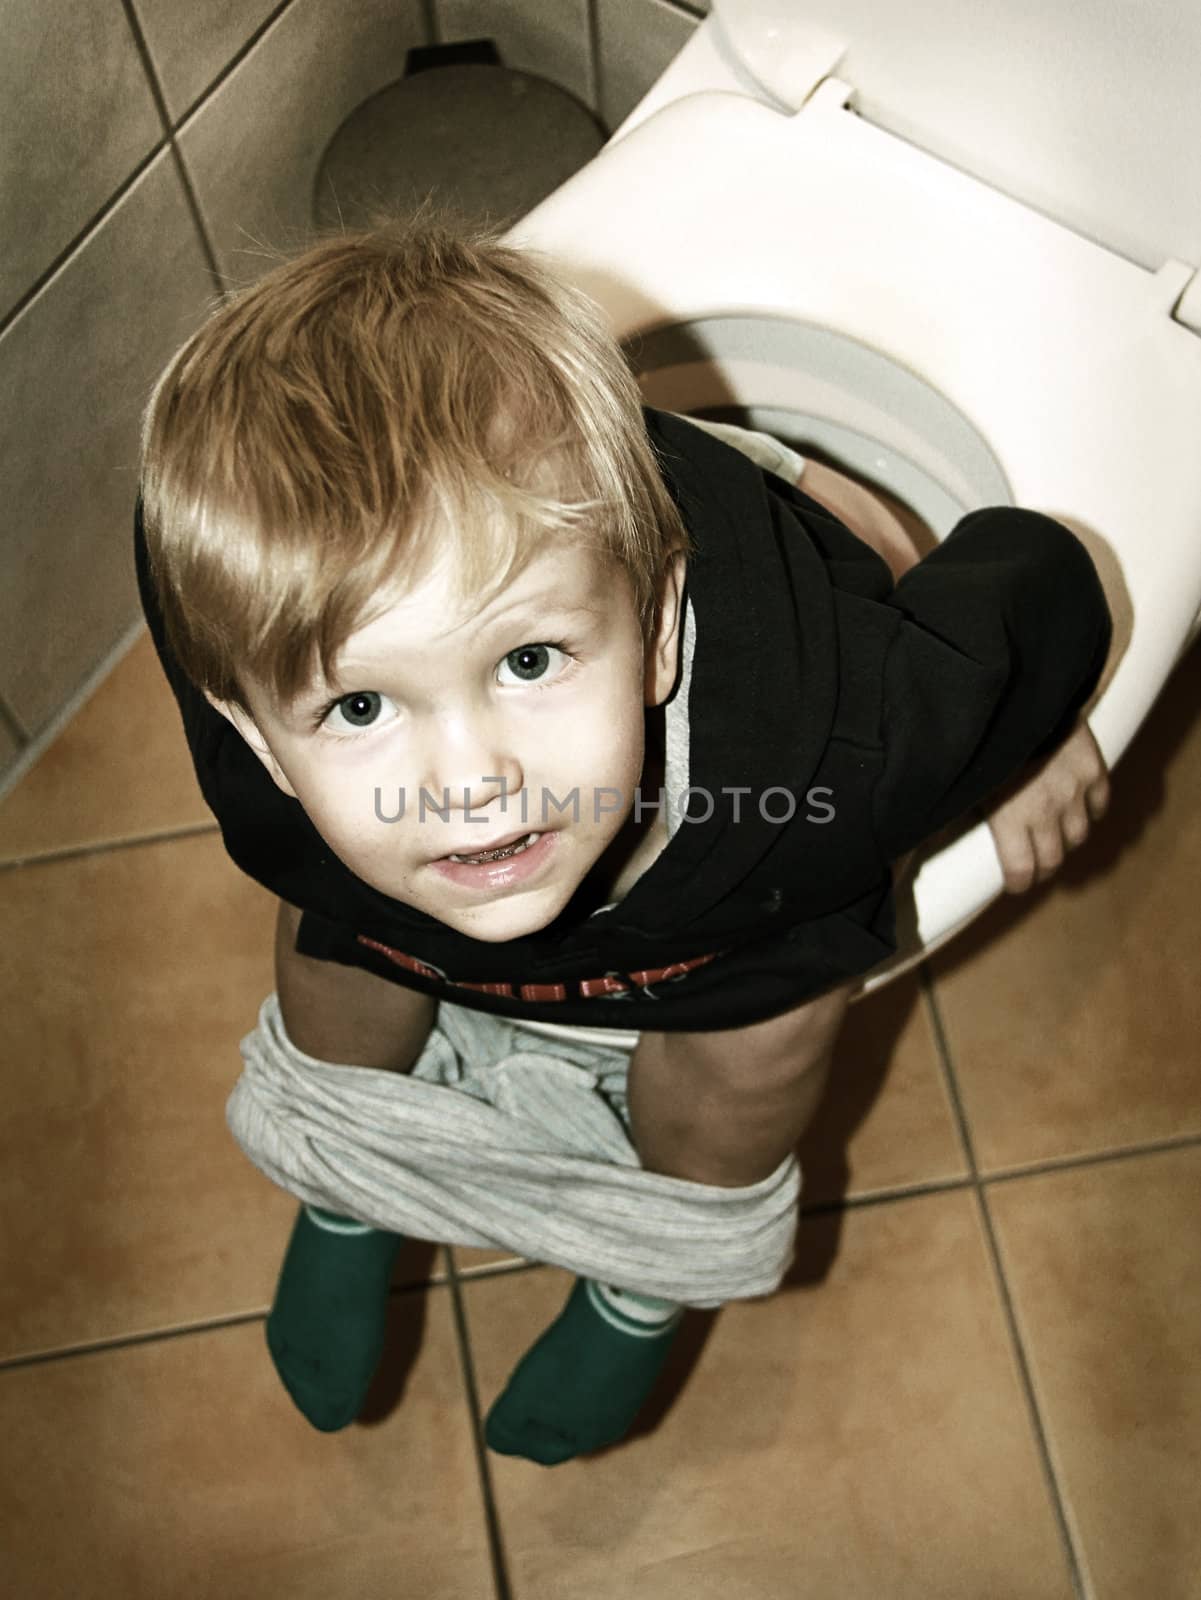 little boy on the toilet by Hasenonkel